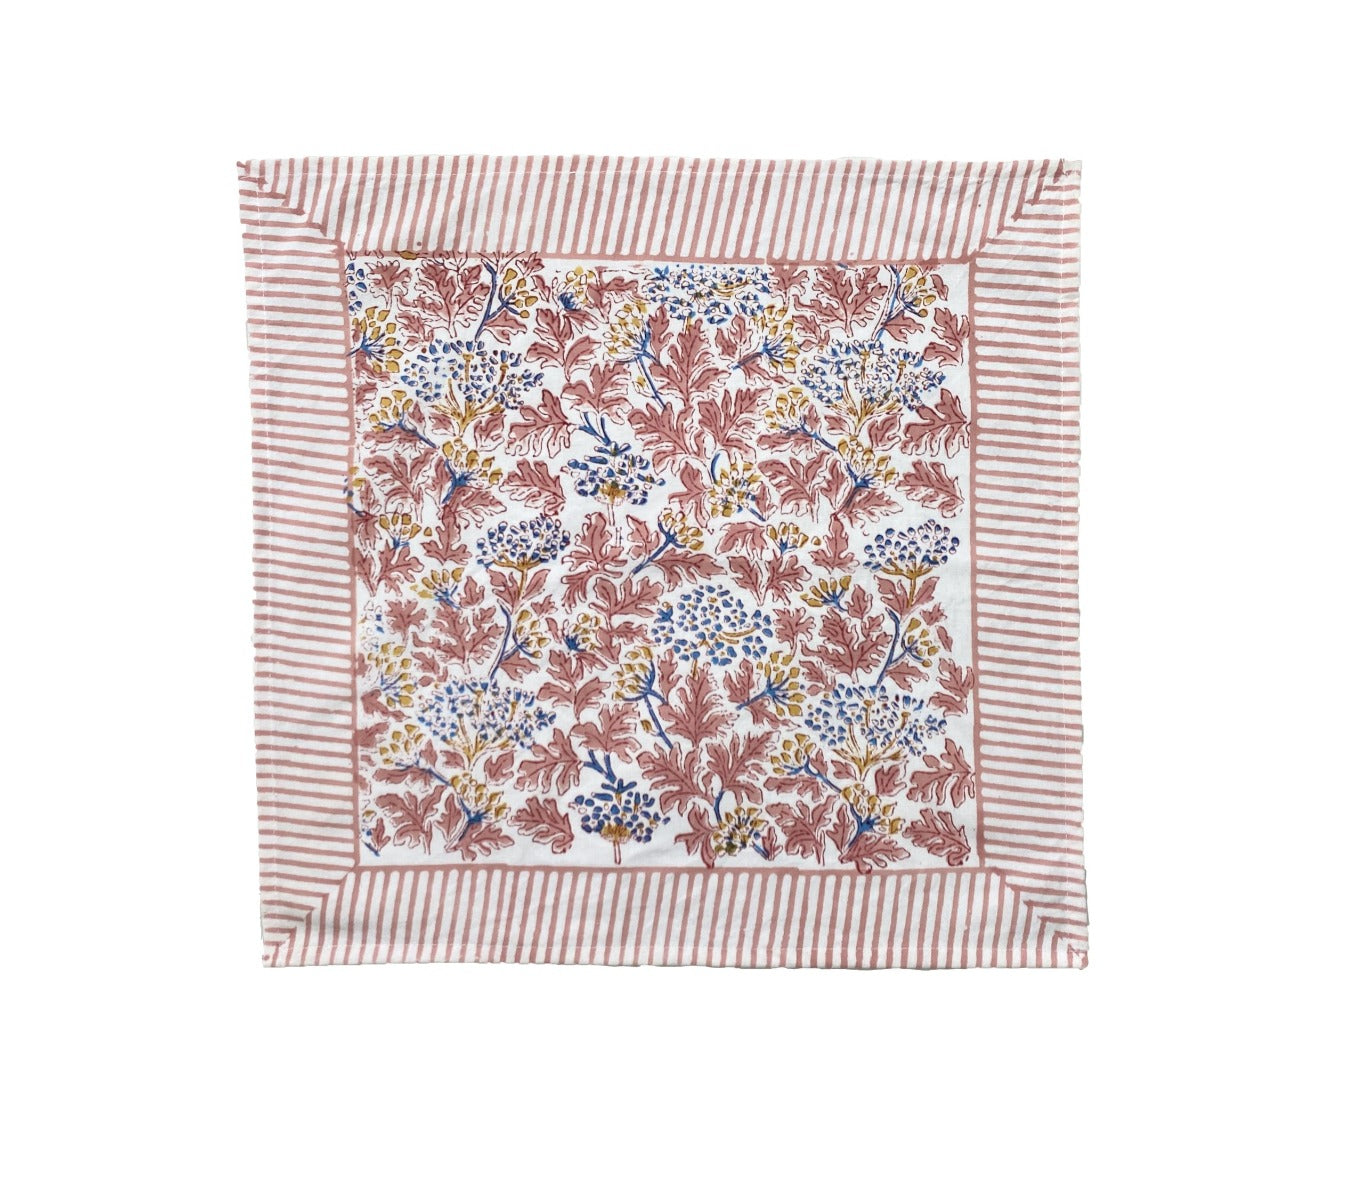 Kelpie Block Print Cotton Napkin in Pink and Blue